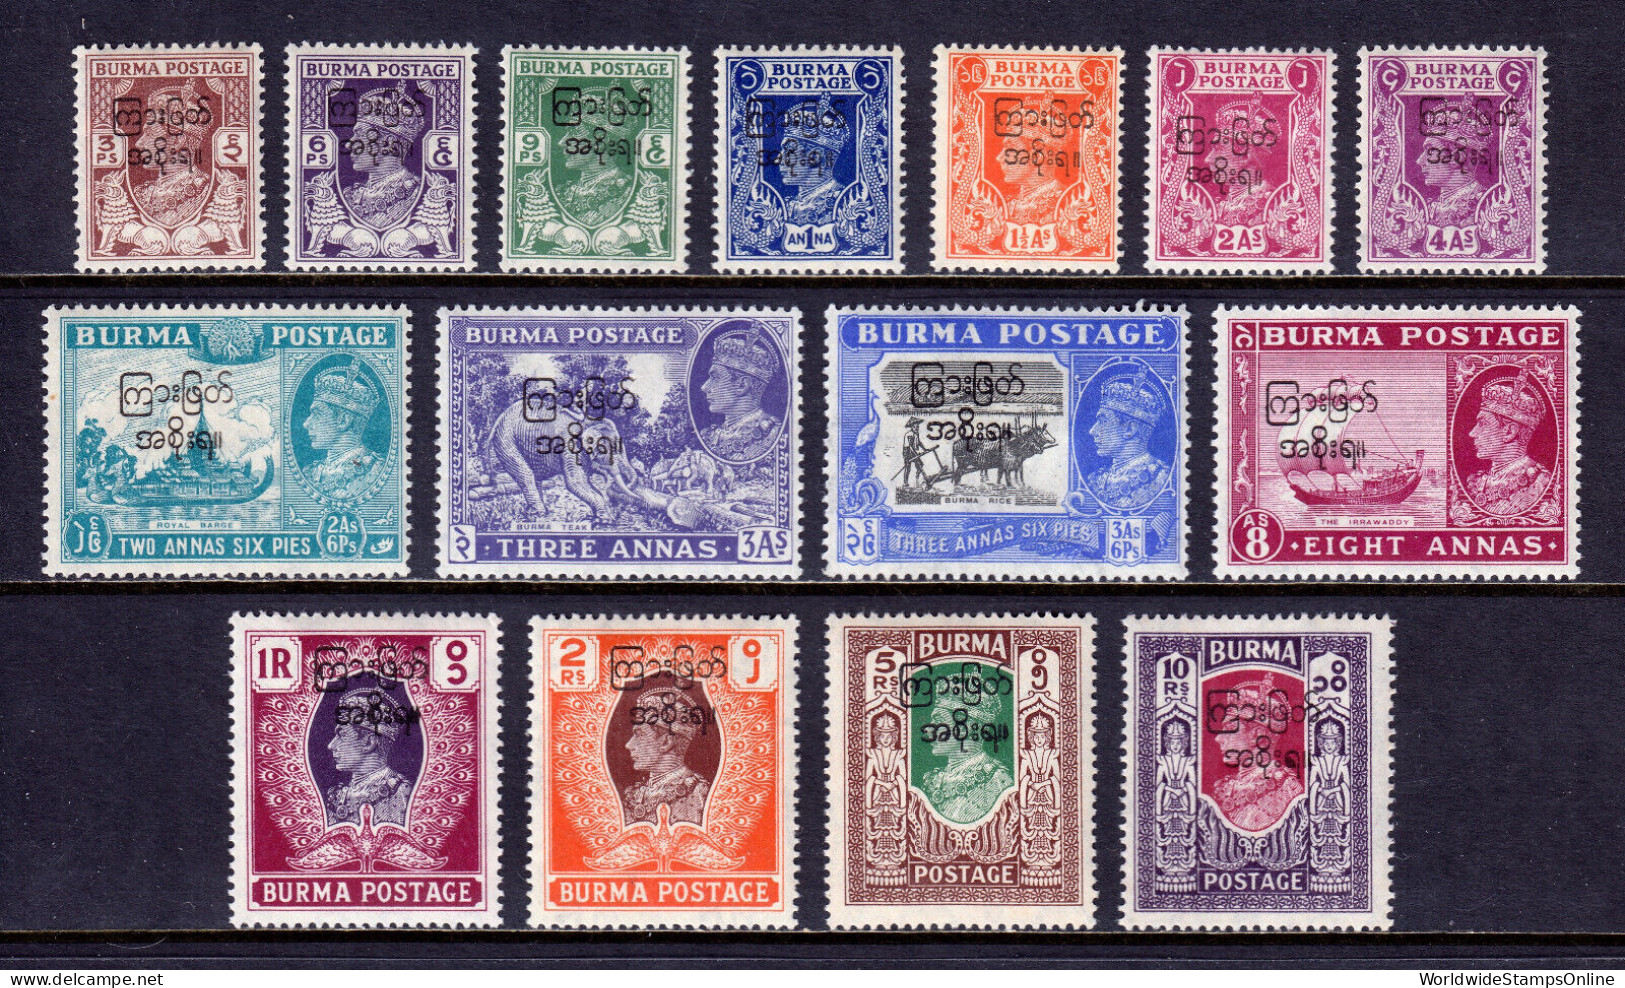 BURMA — SCOTT 70-84 — 1947 KGVI INTERIM GOVERNMENT OVPT. SET — MH — SCV $49 - Birma (...-1947)